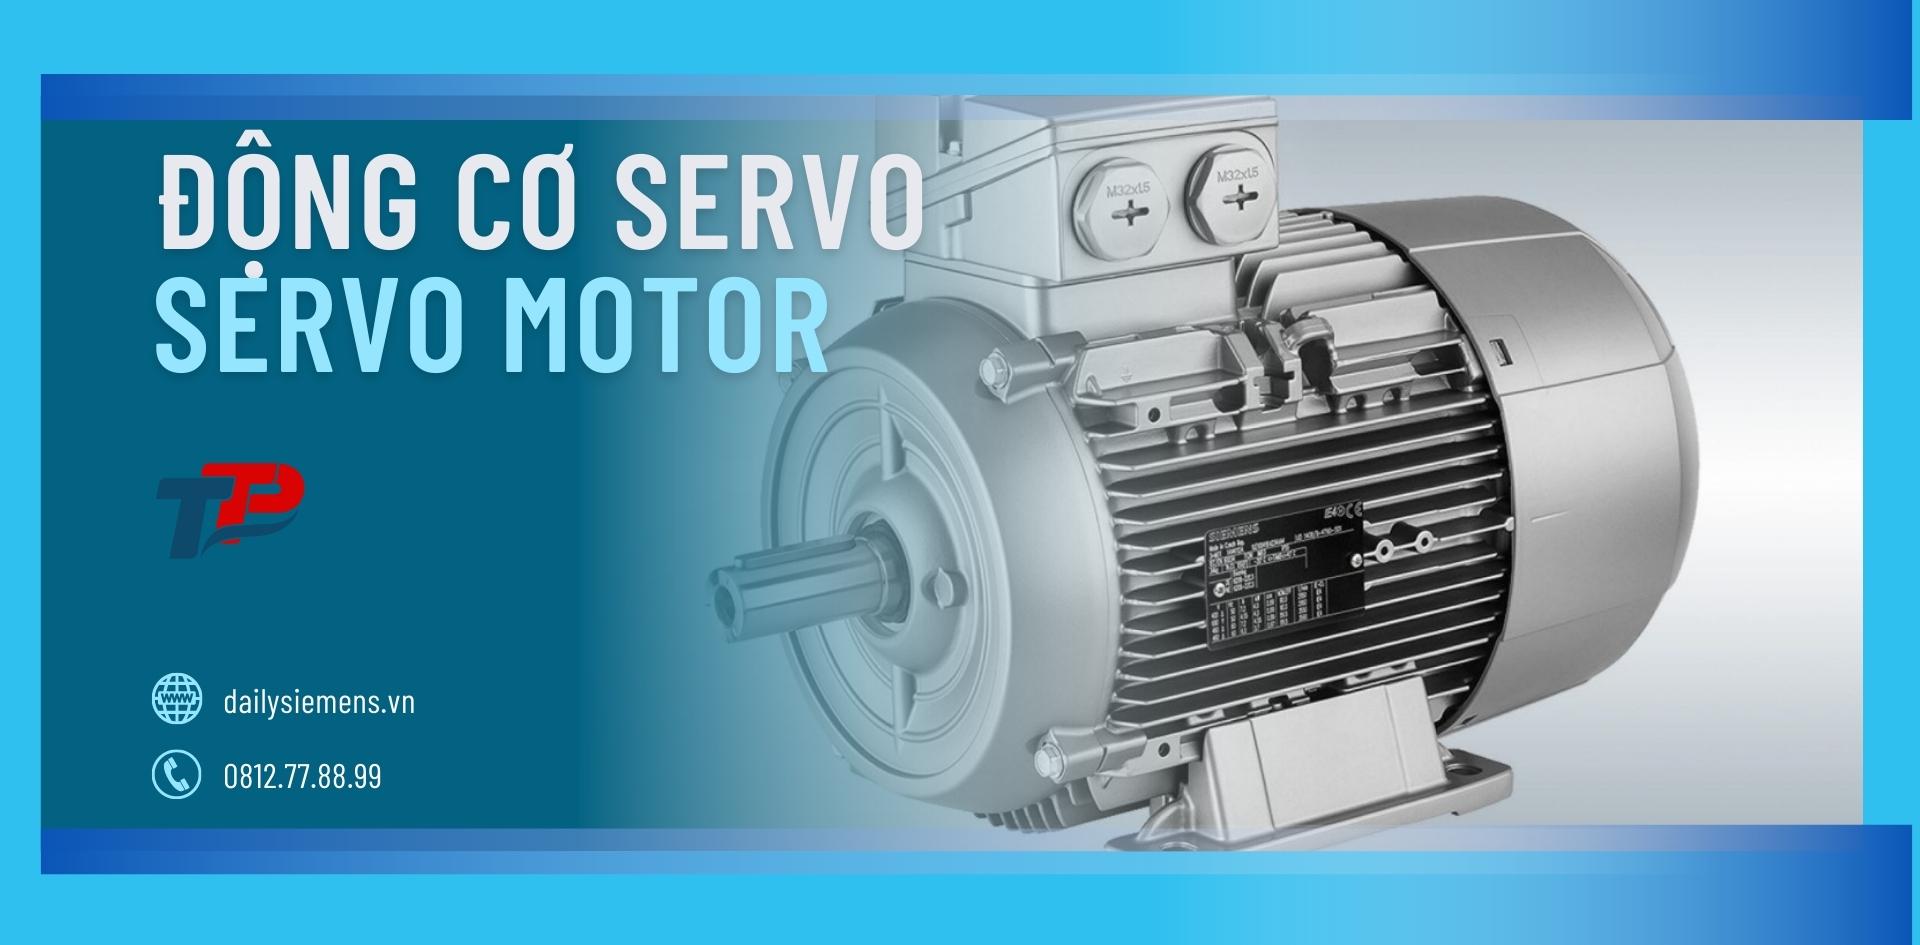 Động cơ Servo - Servo Motor